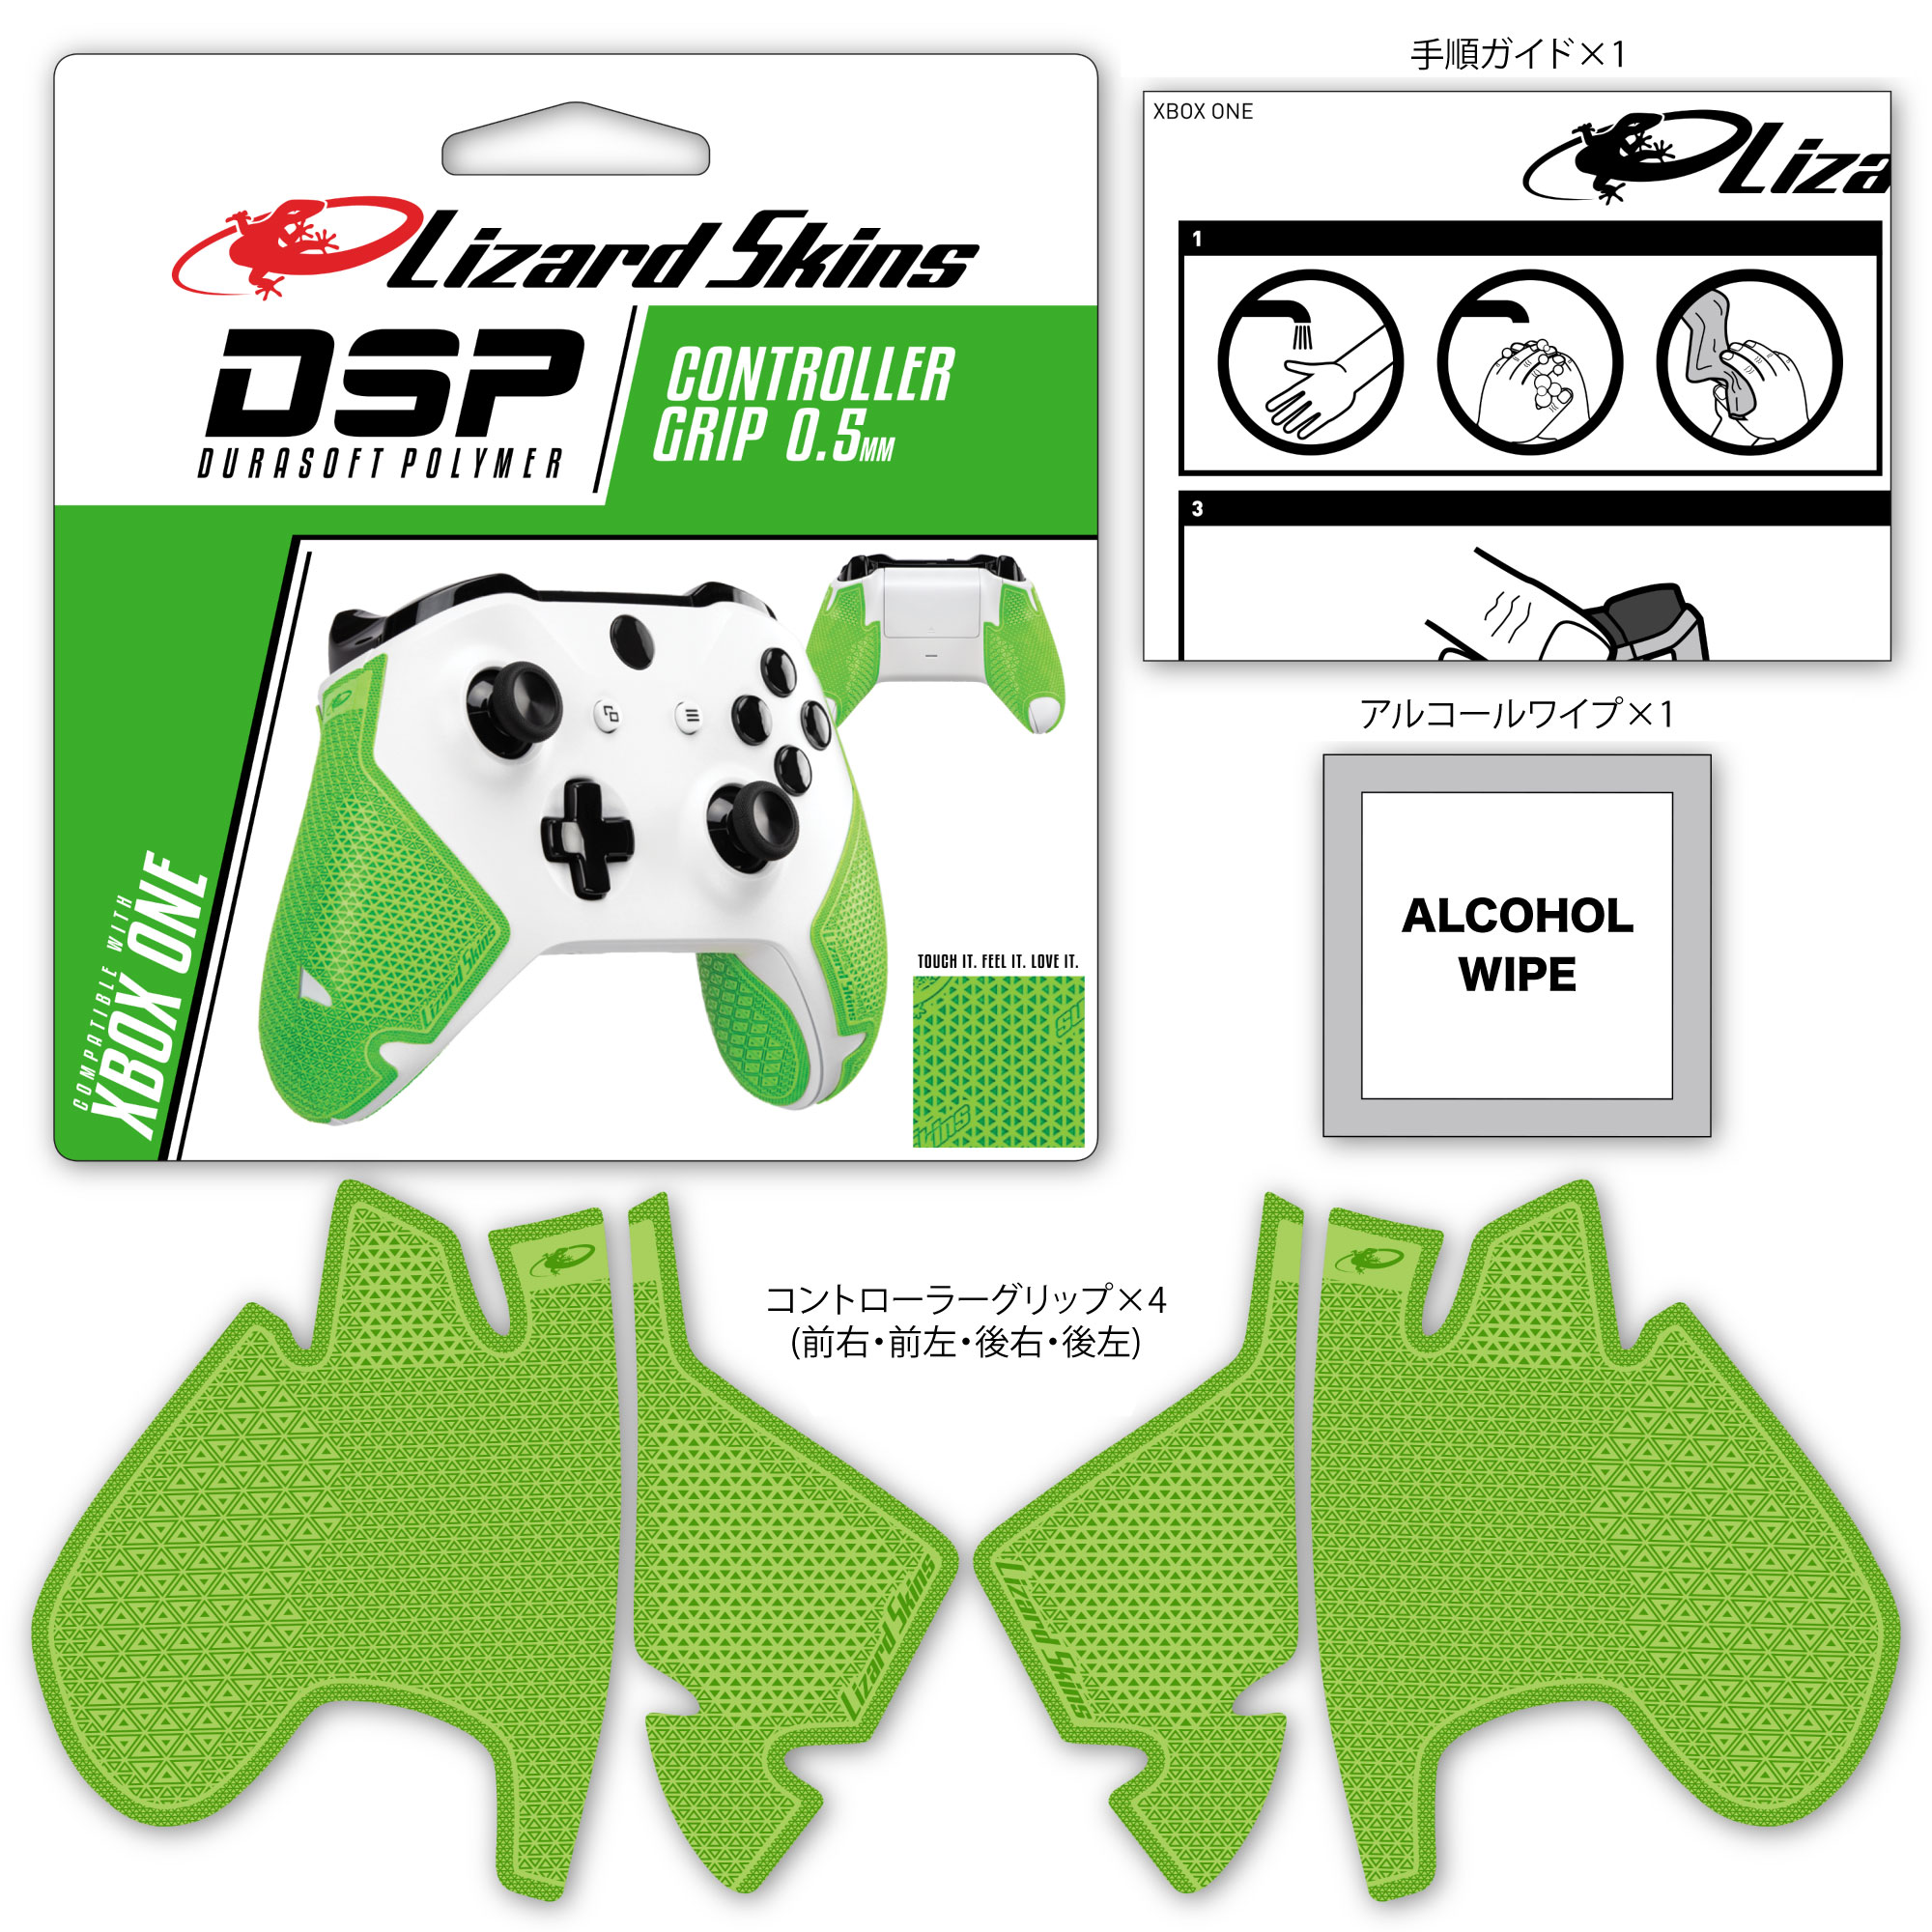 DSP XBOX ONE コントローラーグリップ - Lizard Skins - 株式会社アーキサイト